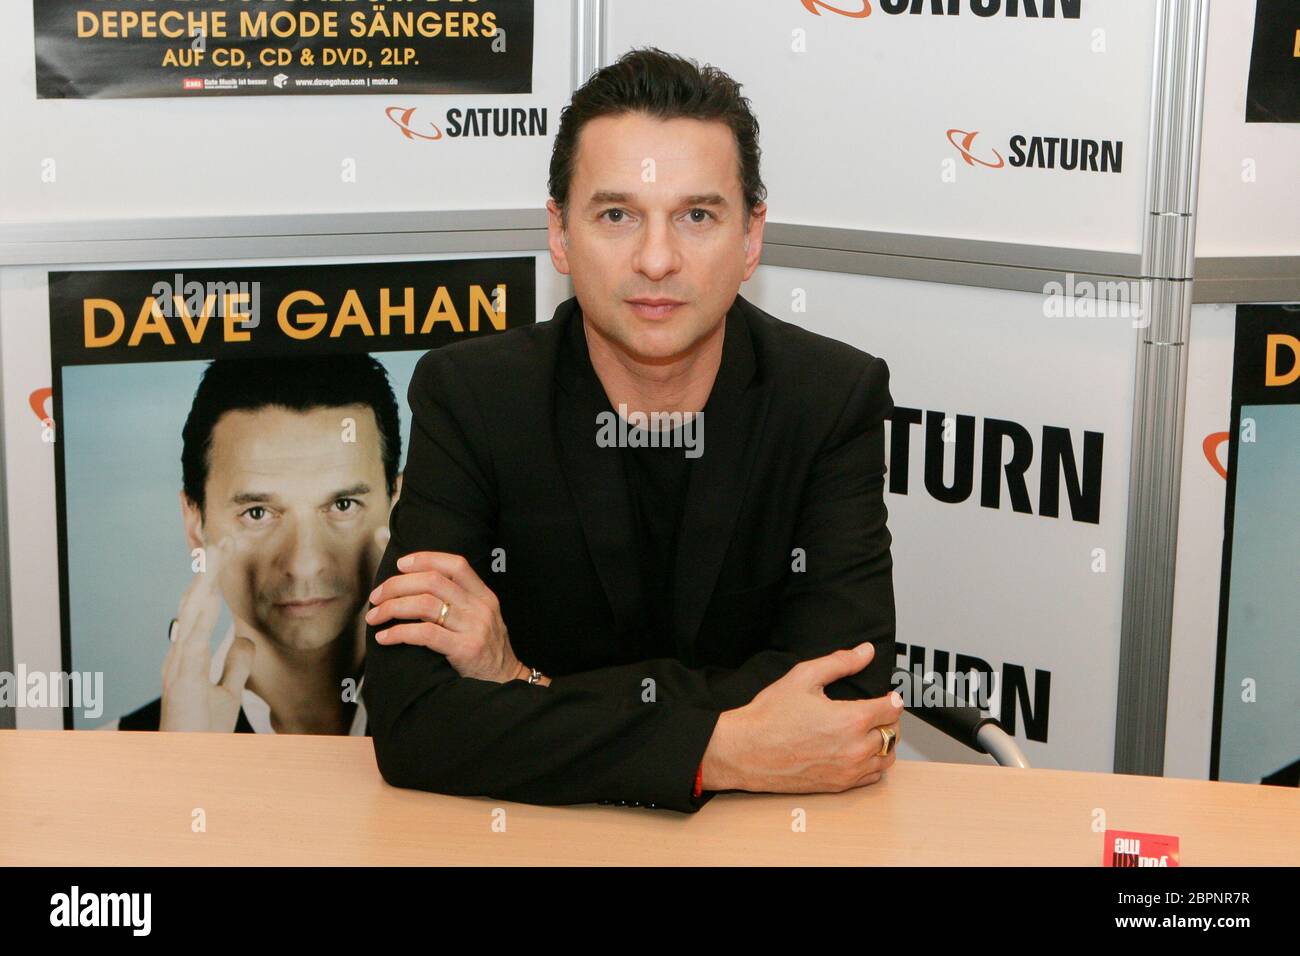 Autogrammstunde Dave Gahan - Depeche Mode Frontmann und Sänger Dave Gahan präsentiert sein 2. Soloalbum 'Hourglass' bei Saturn Hansaring in Köln Stock Photo